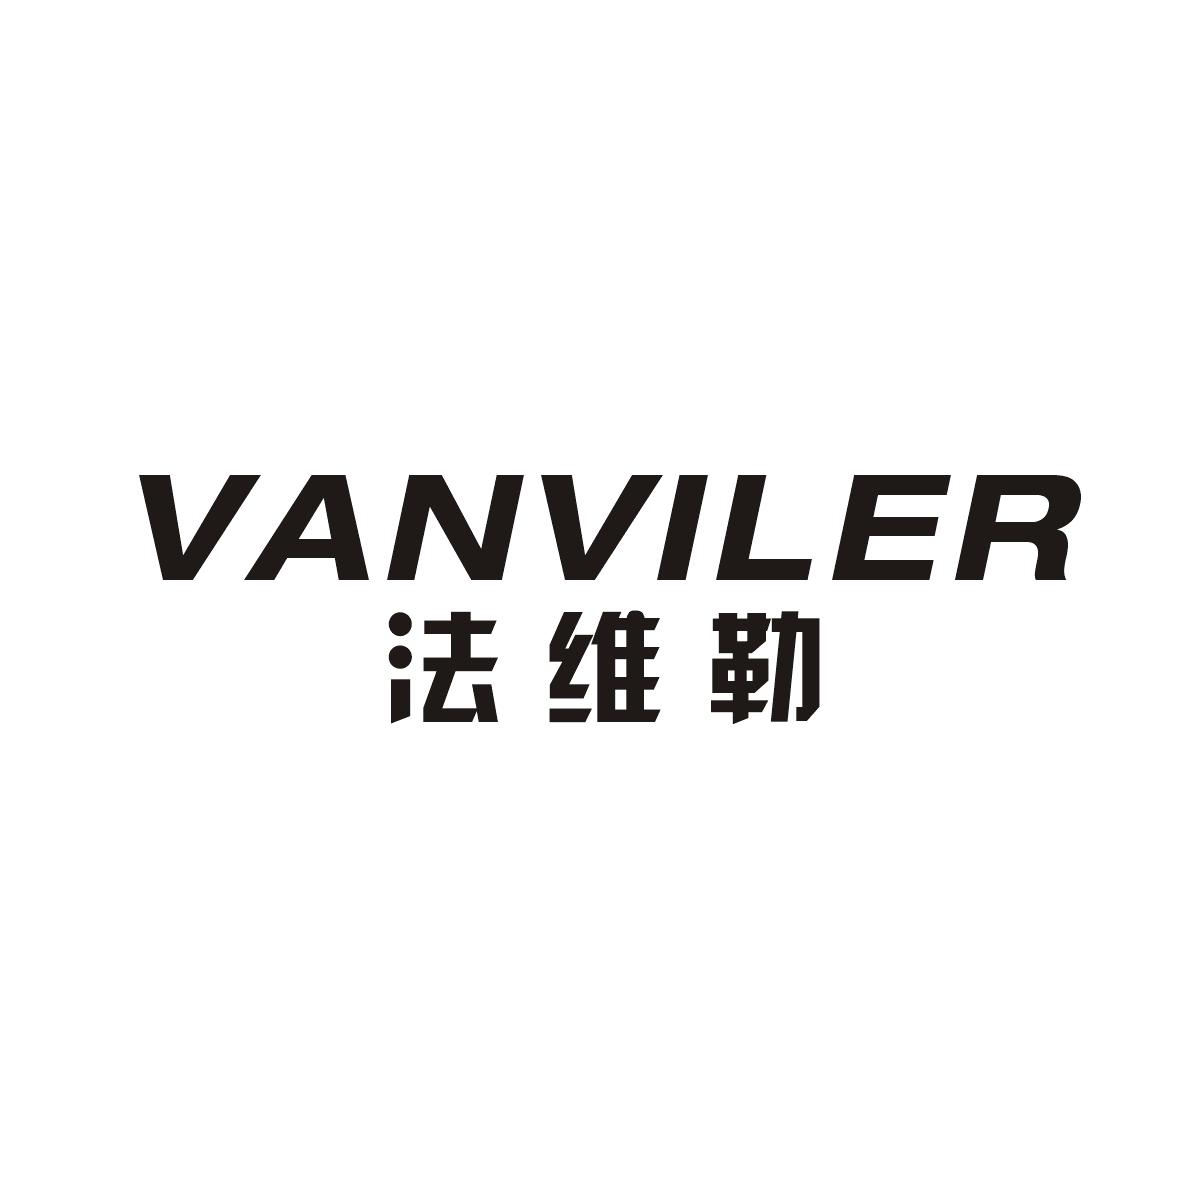 VANVILER 法维勒商标转让